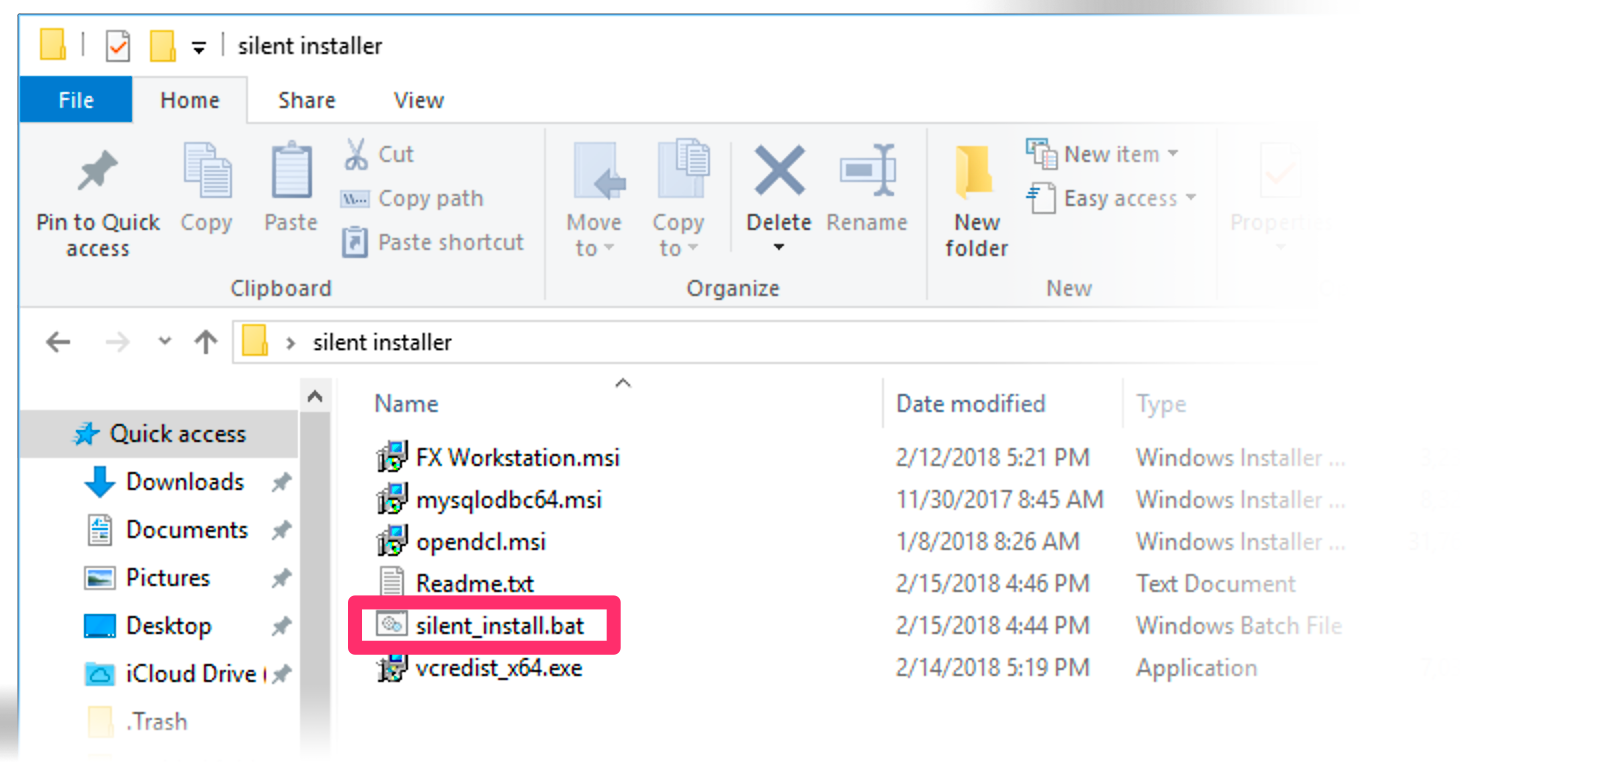 silent installer folder containing the file silent_install.bat